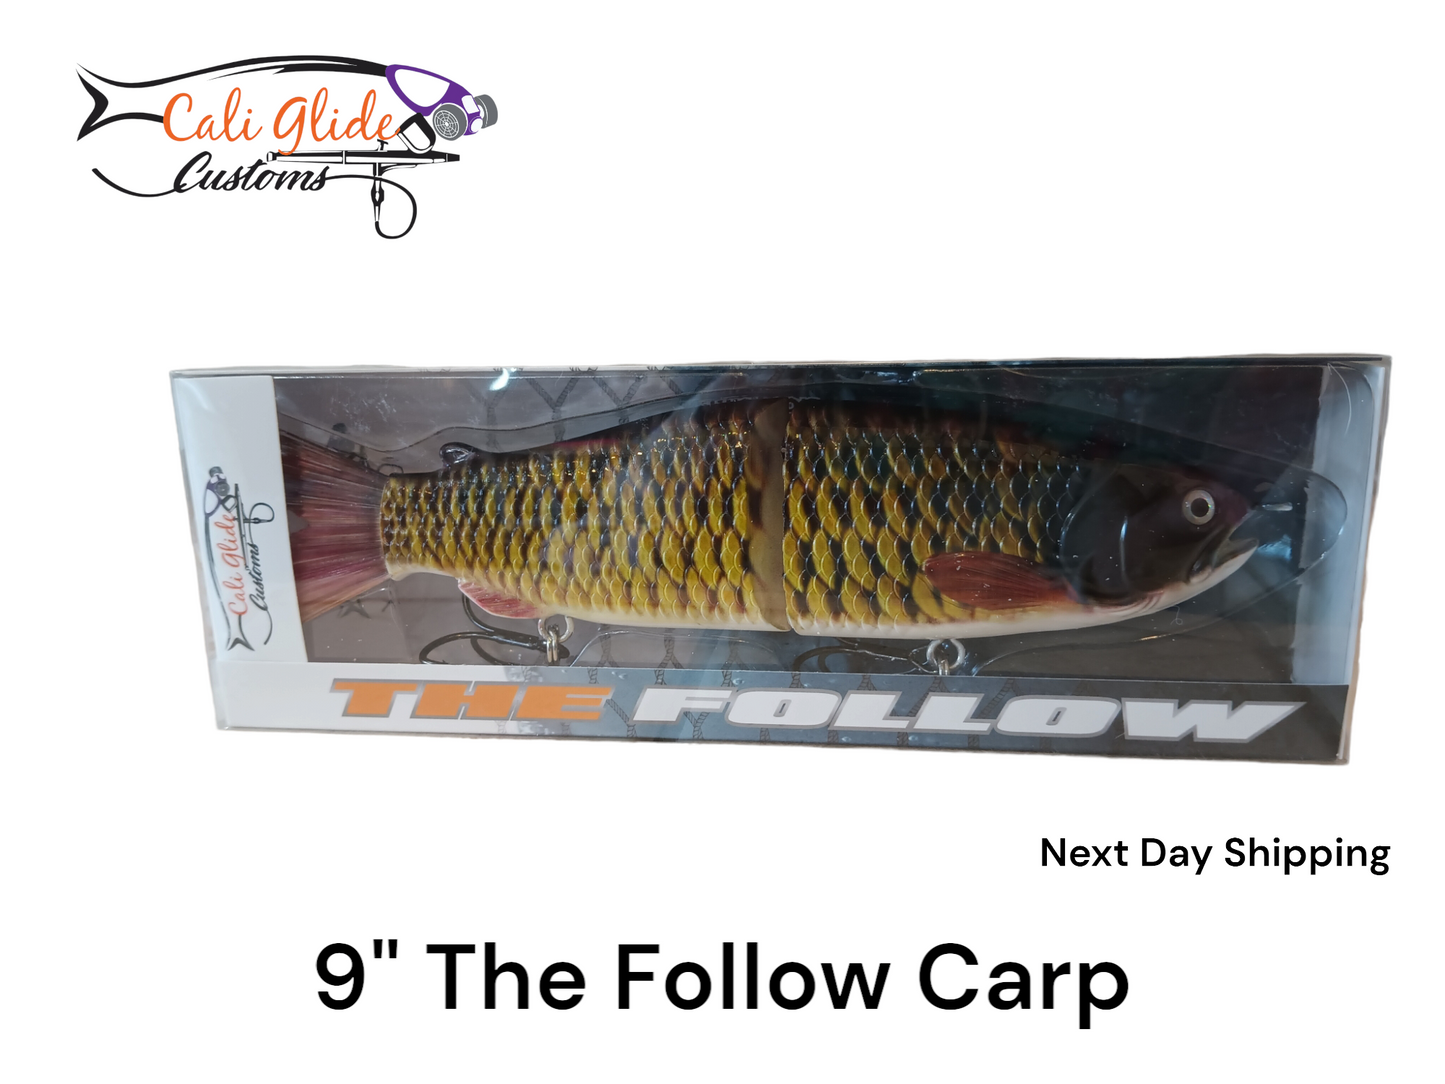 9" The Follow Carp Cali Glide Swimbait